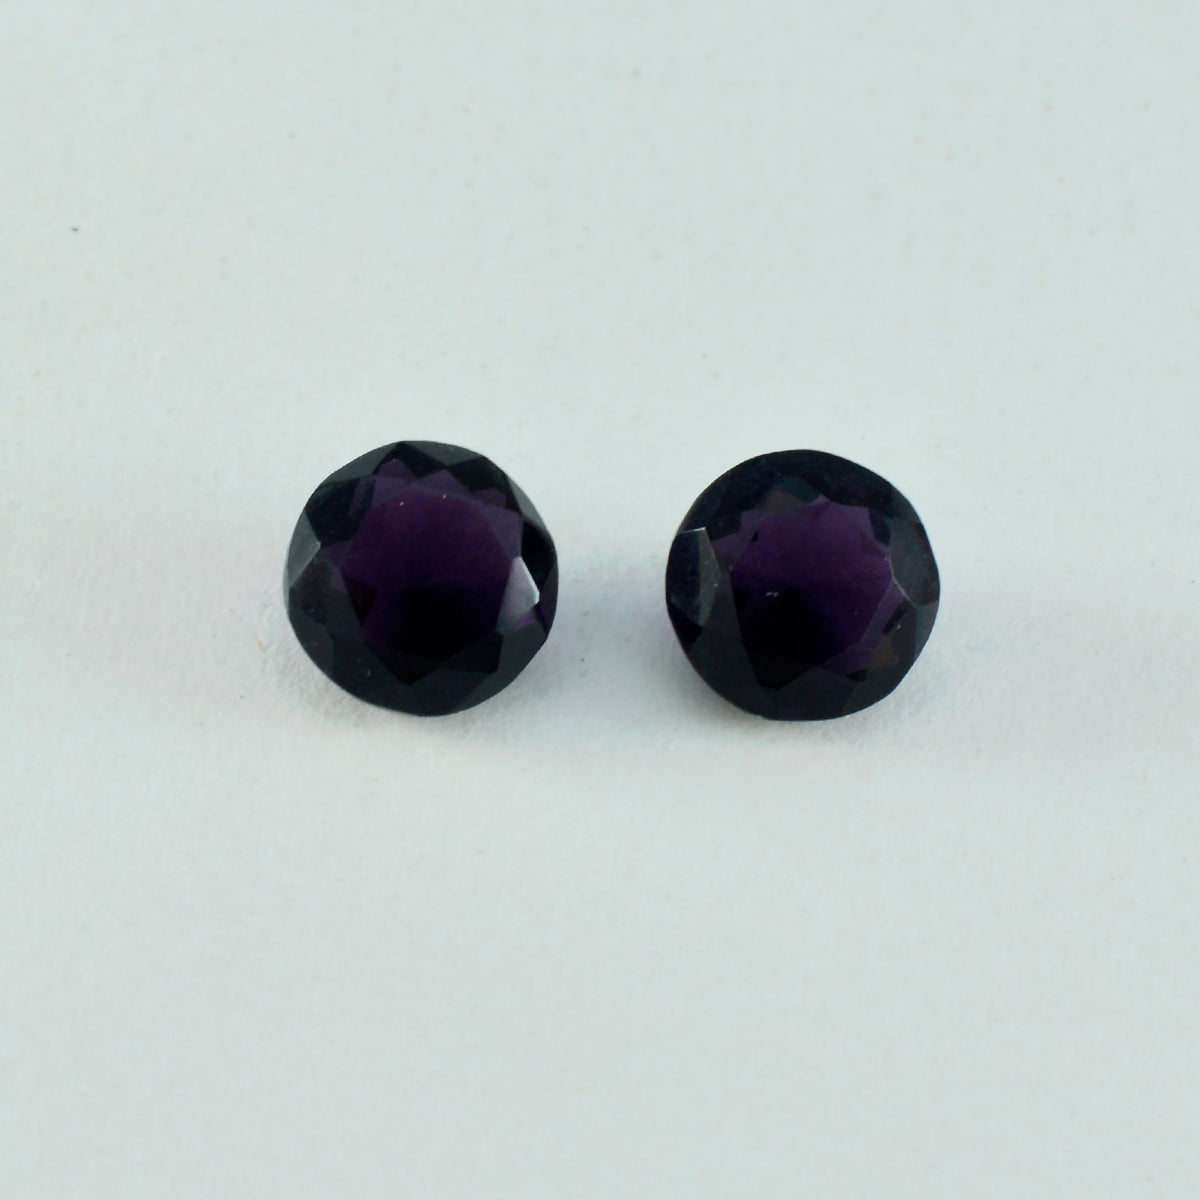 Riyogems 1PC Purple Amethyst CZ Faceted 12x12 mm Round Shape astonishing Quality Stone